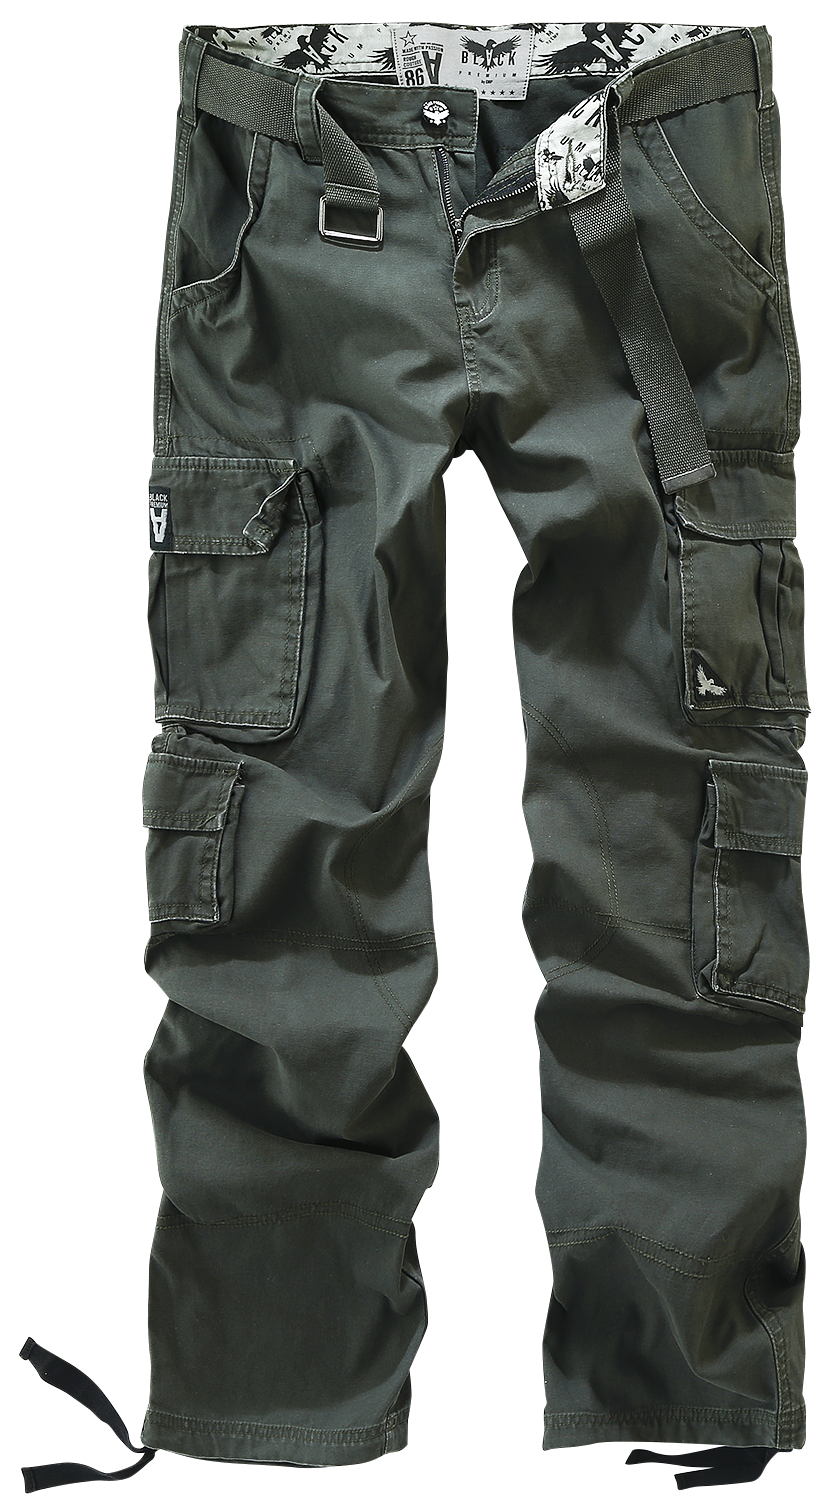 Black Premium by EMP - Army Vintage Trousers - Cargohose - khaki - EMP Exklusiv!